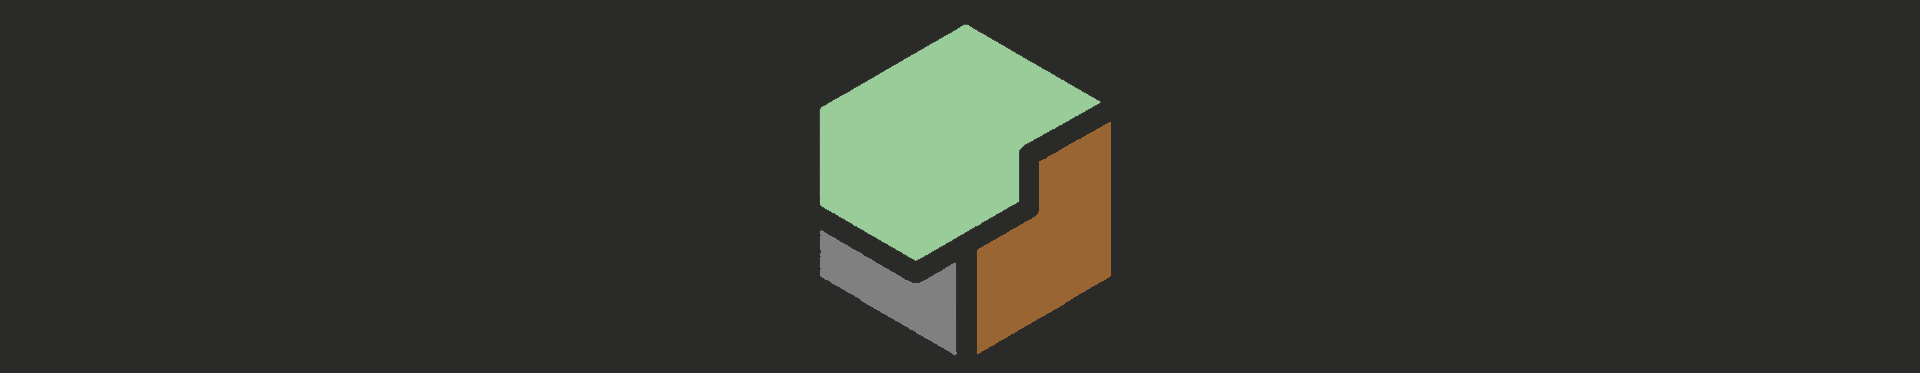 green brown gray cube website logo